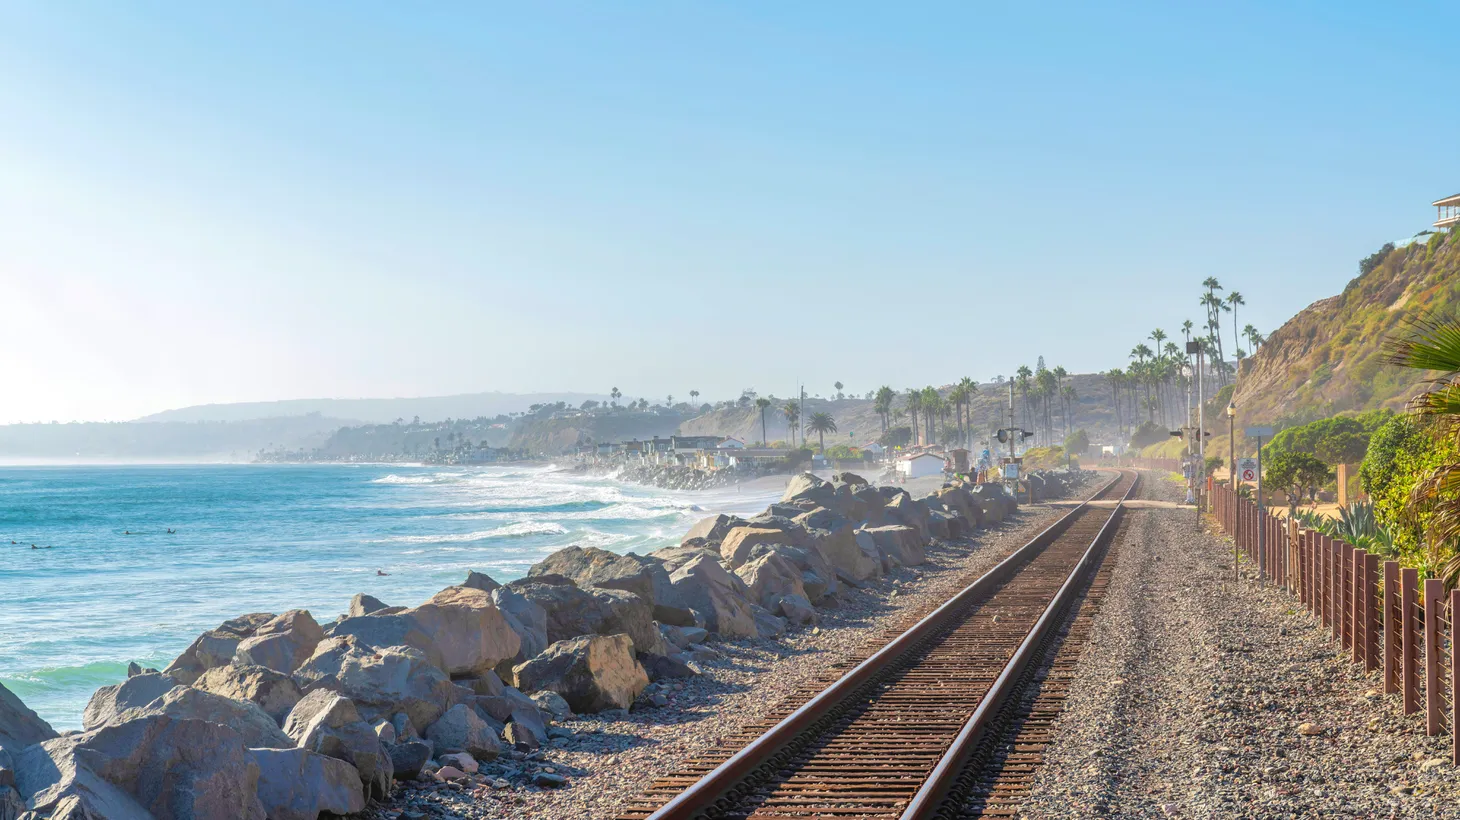 Train tracks run along the coast of San Clemente in California.